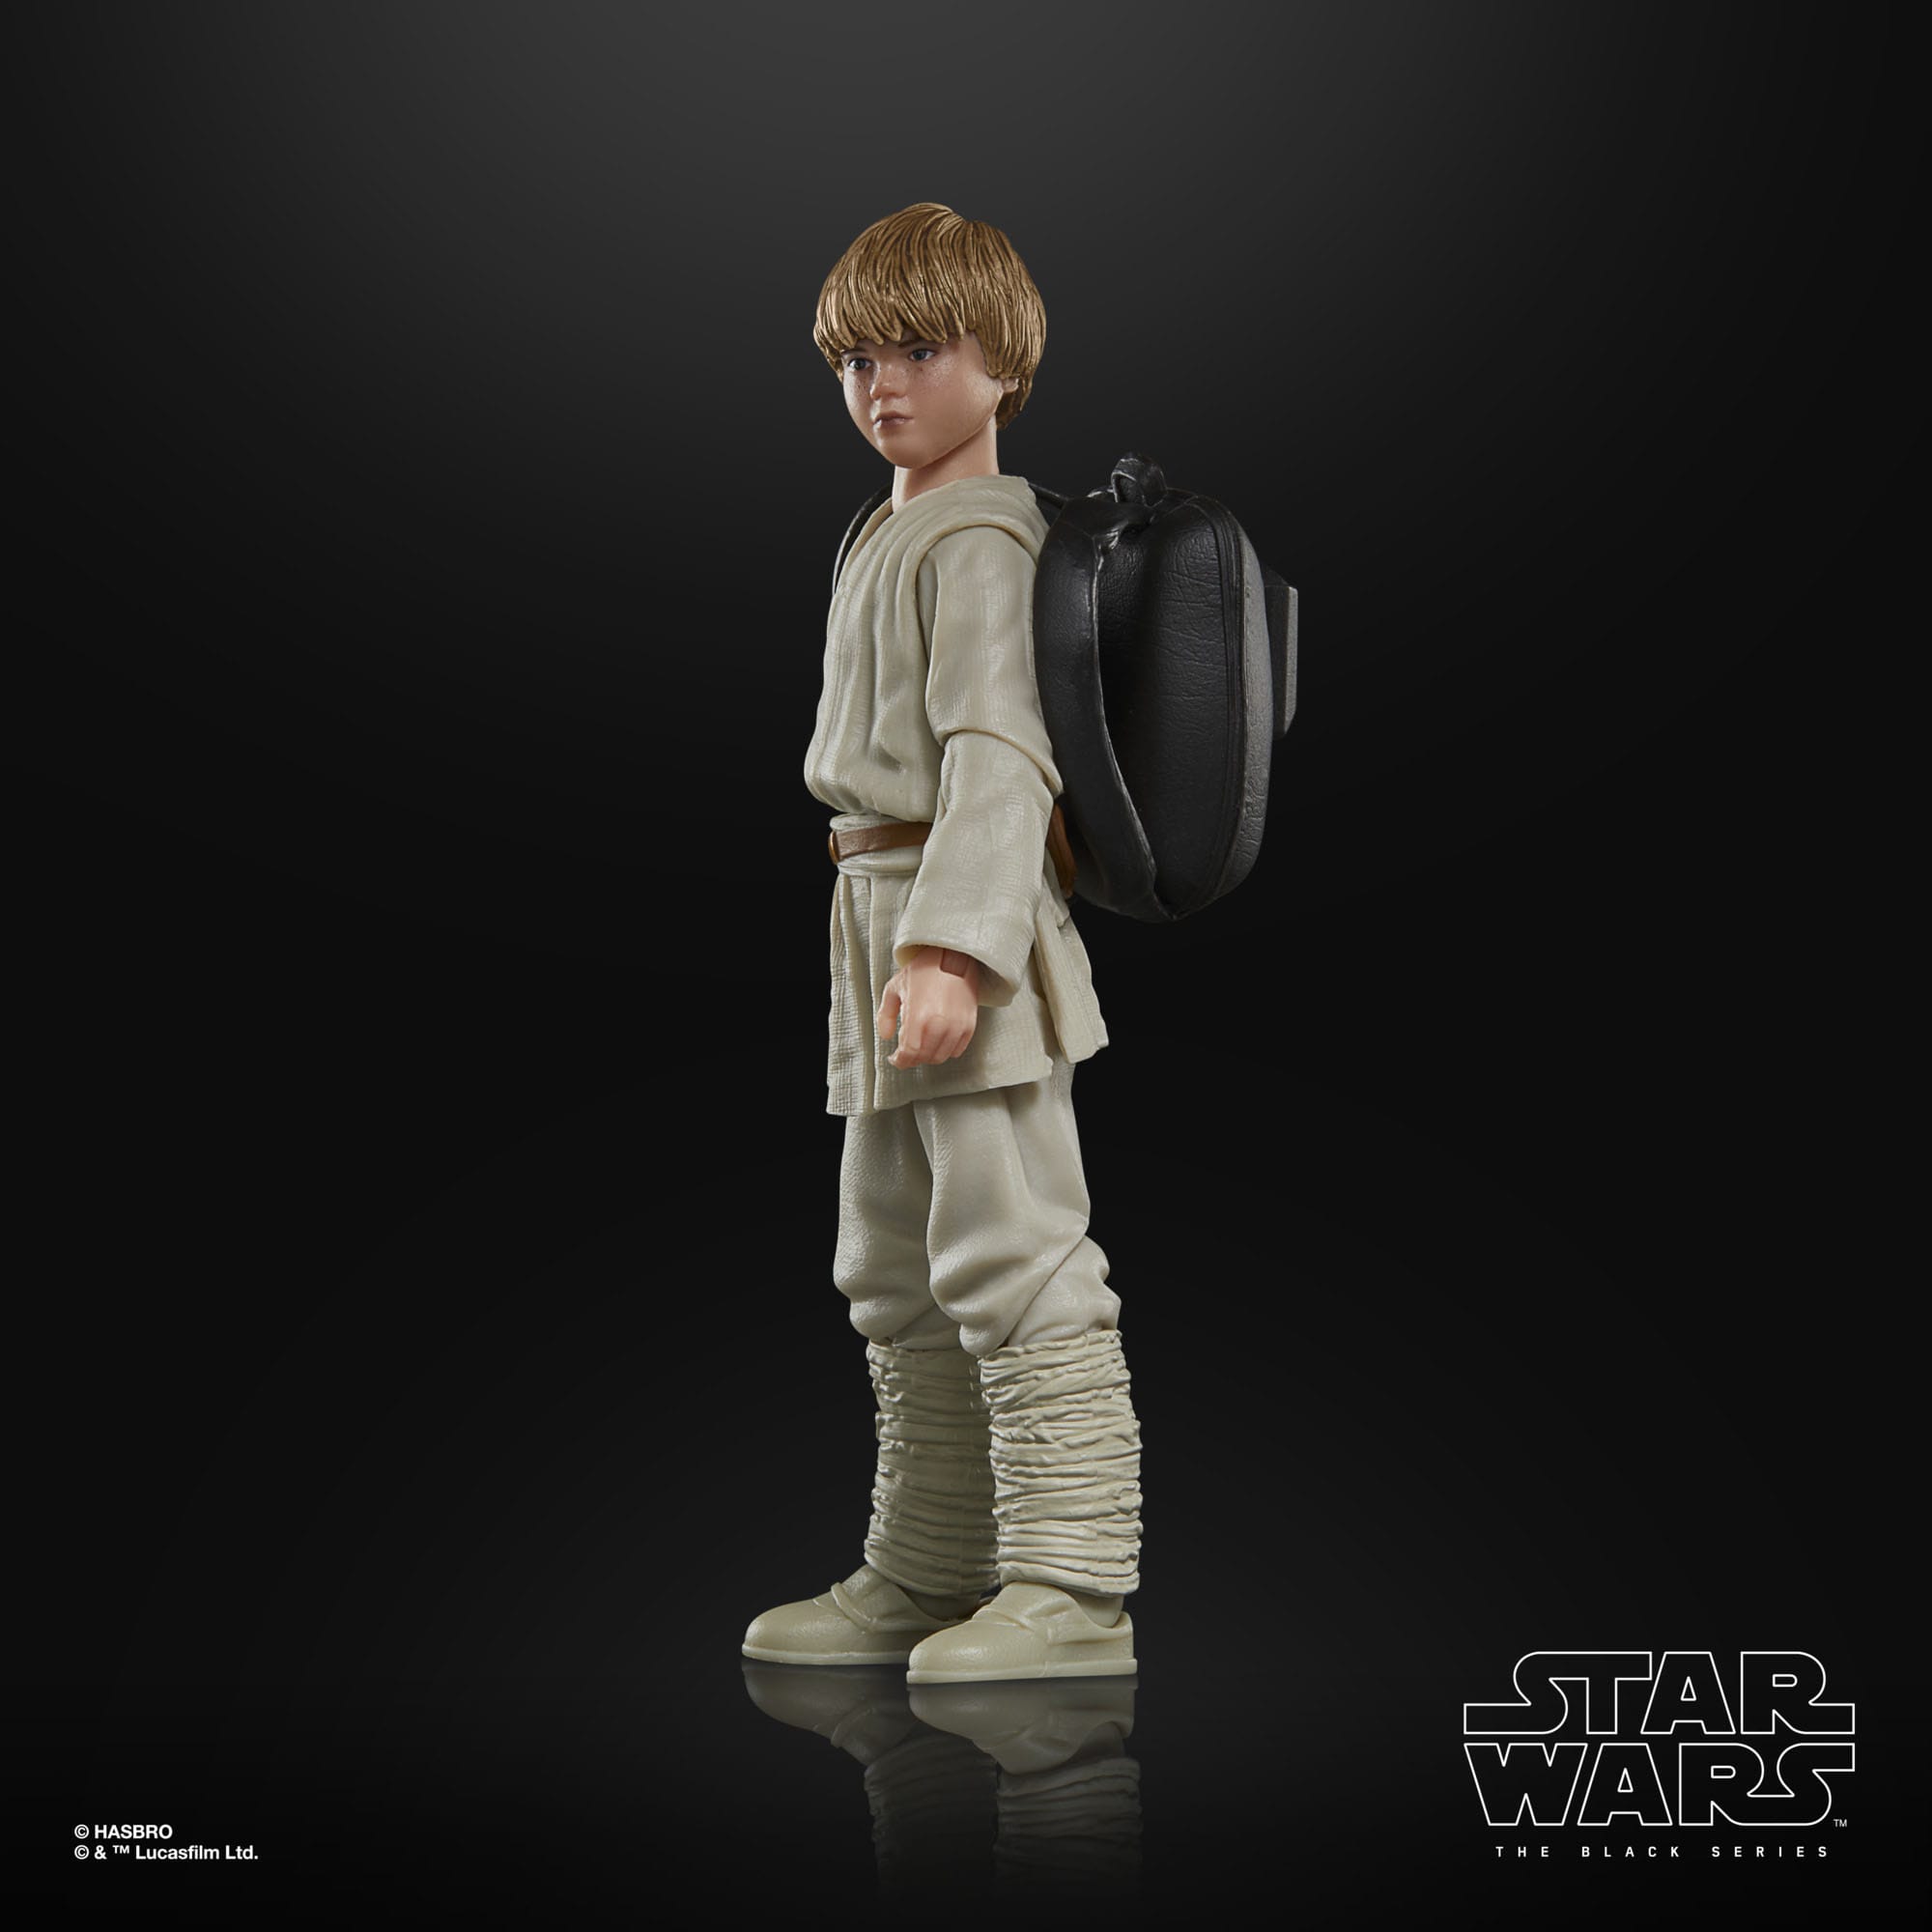 Star Wars Episode I Black Series Actionfigur Anakin Skywalker 15 cm HASG0026 5010996226112